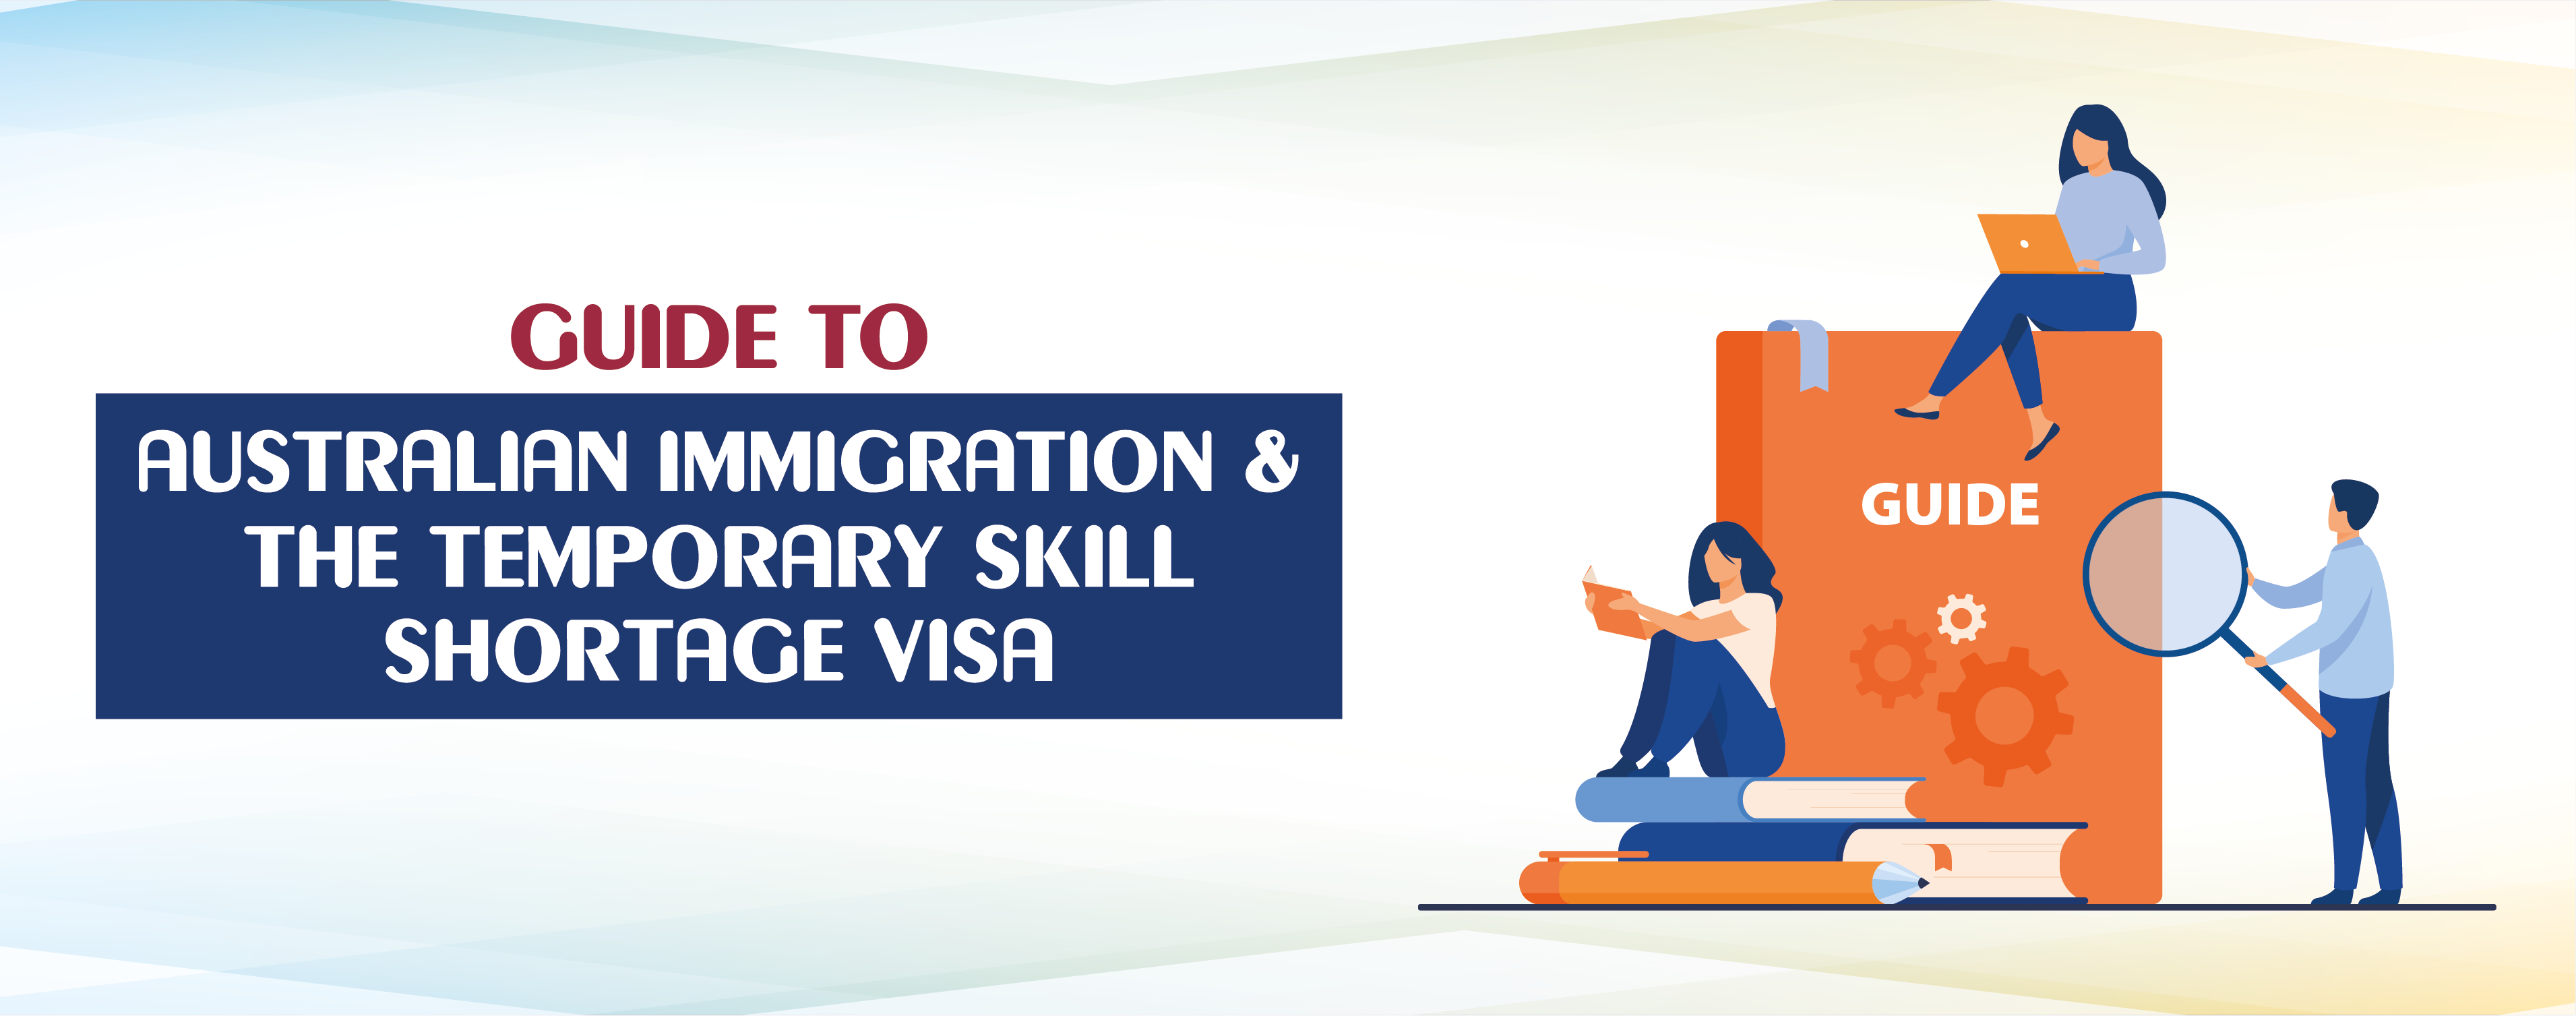 Guide to Temporary Skill Shortage Visa (Subclass 482 Visa)